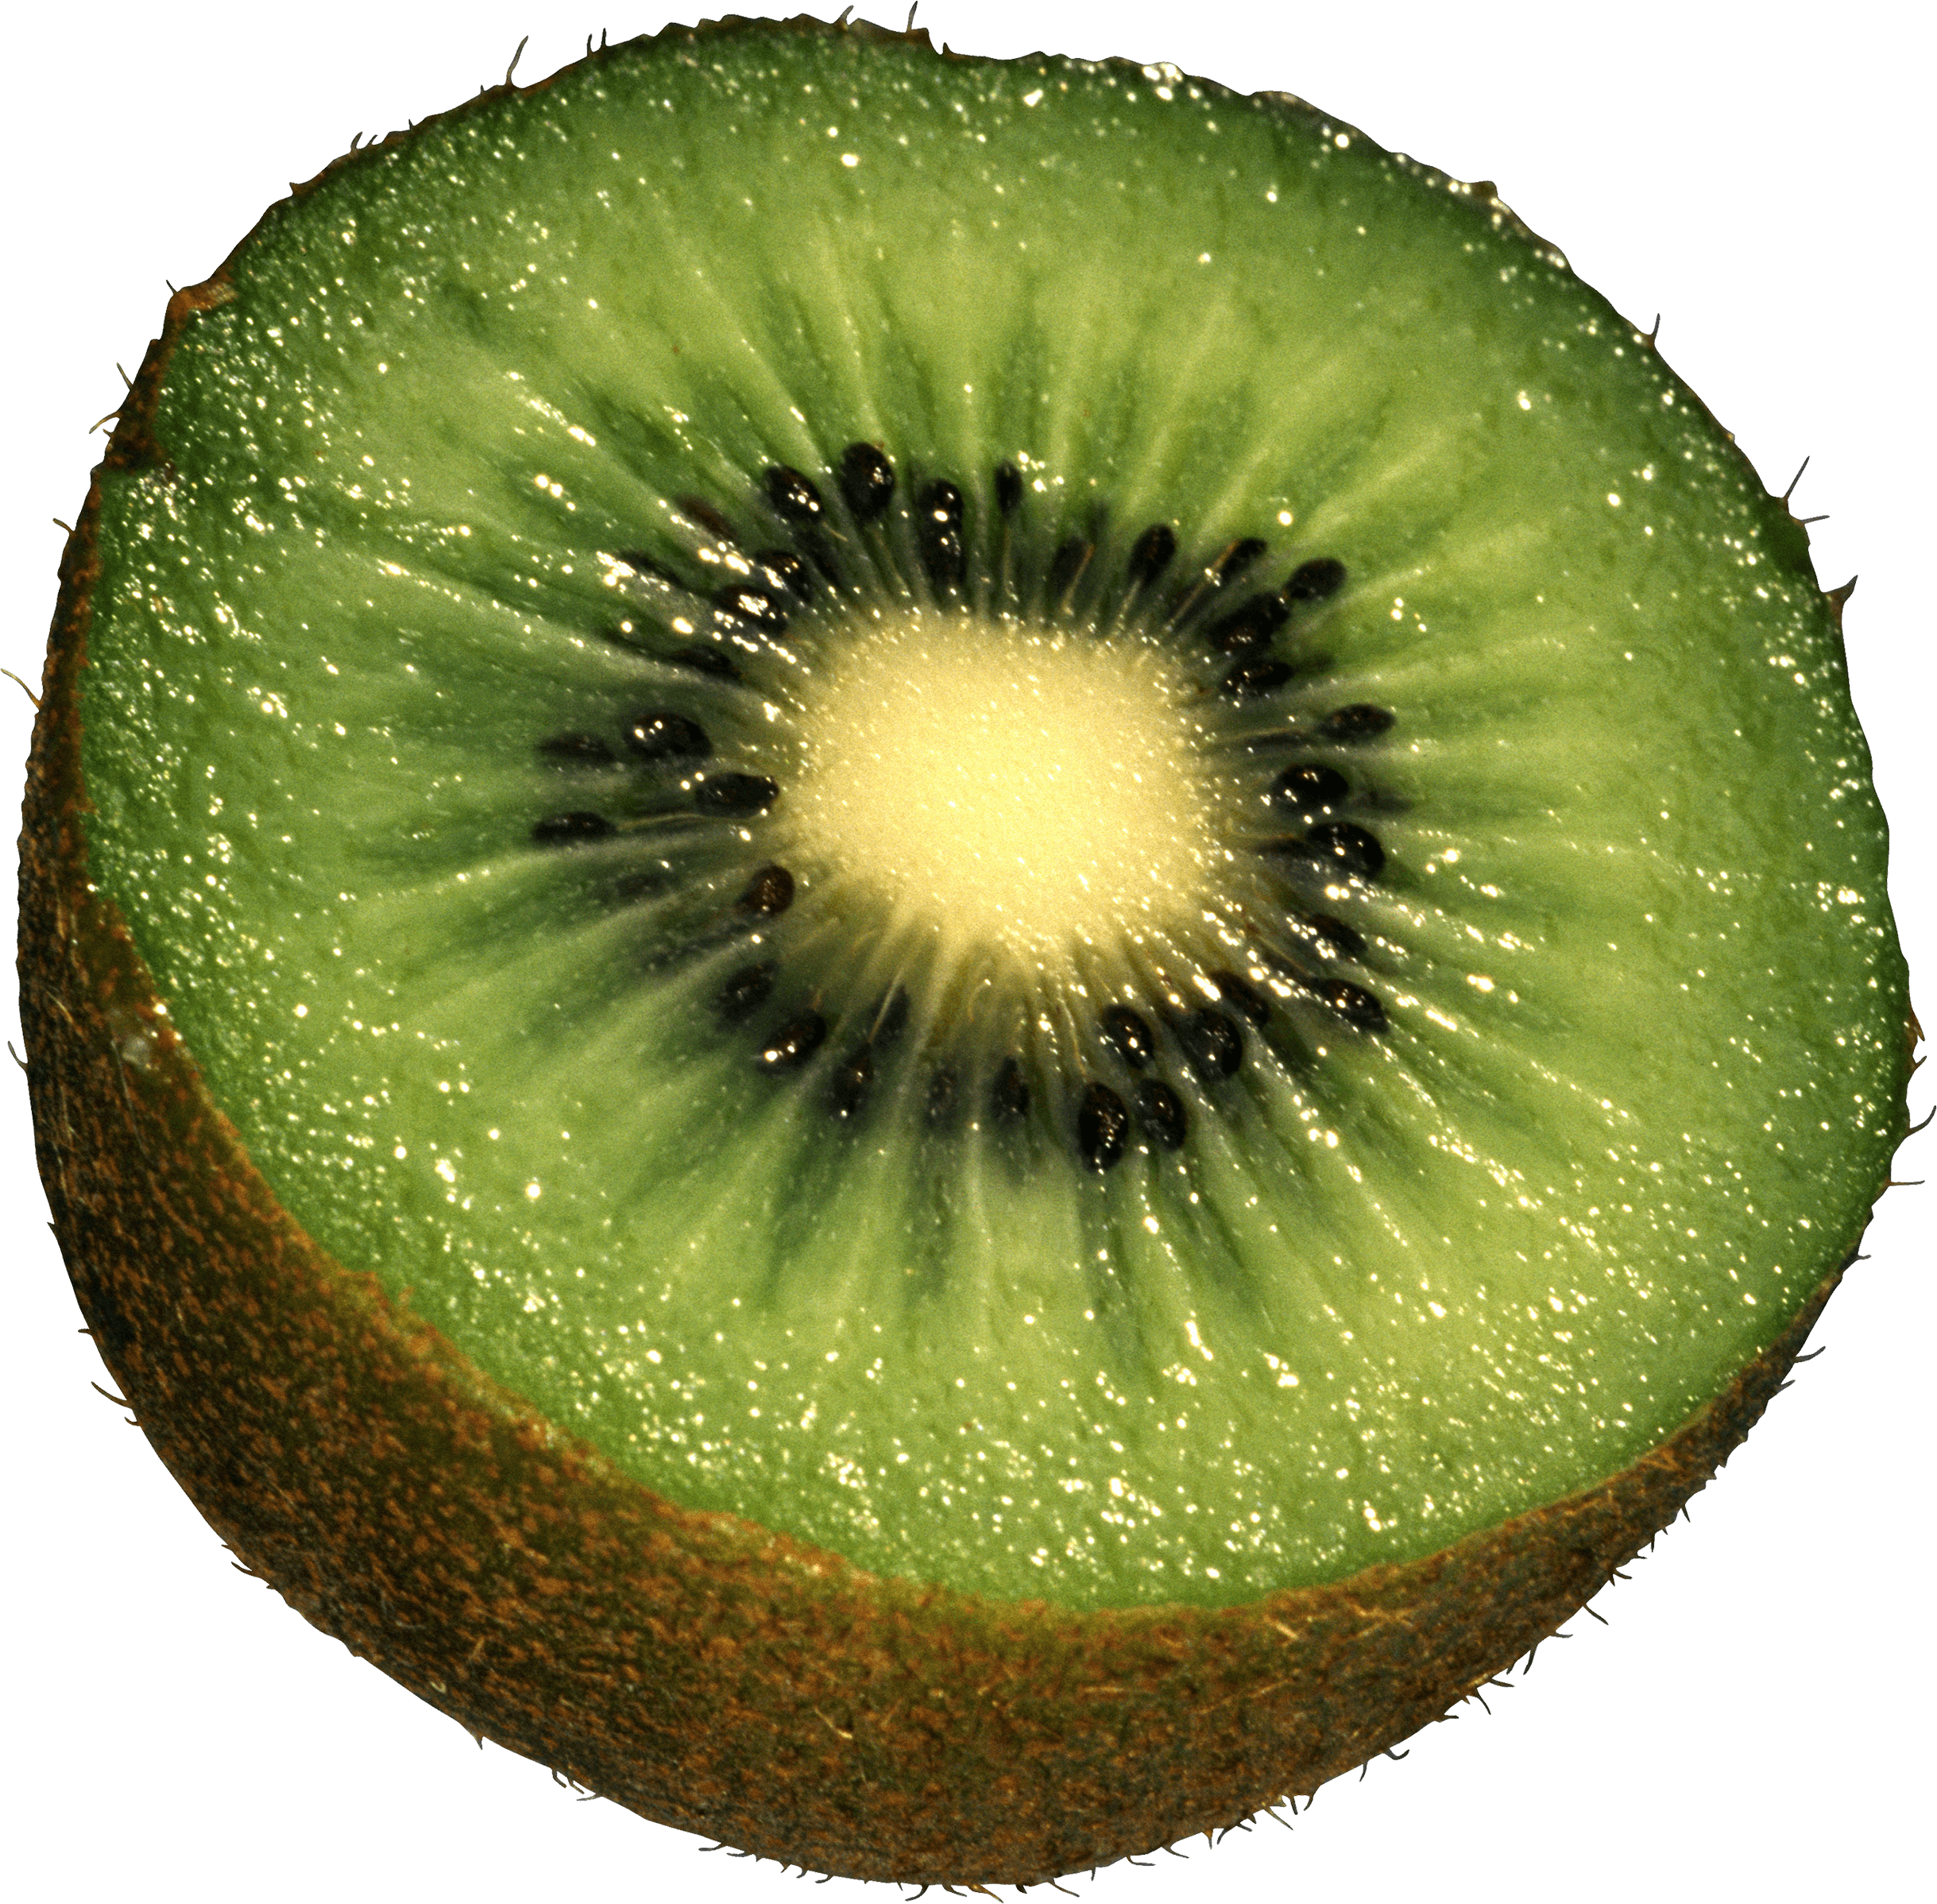 Kiwi Png Image Fruit Kiwi Png Pictures Download PNG Image